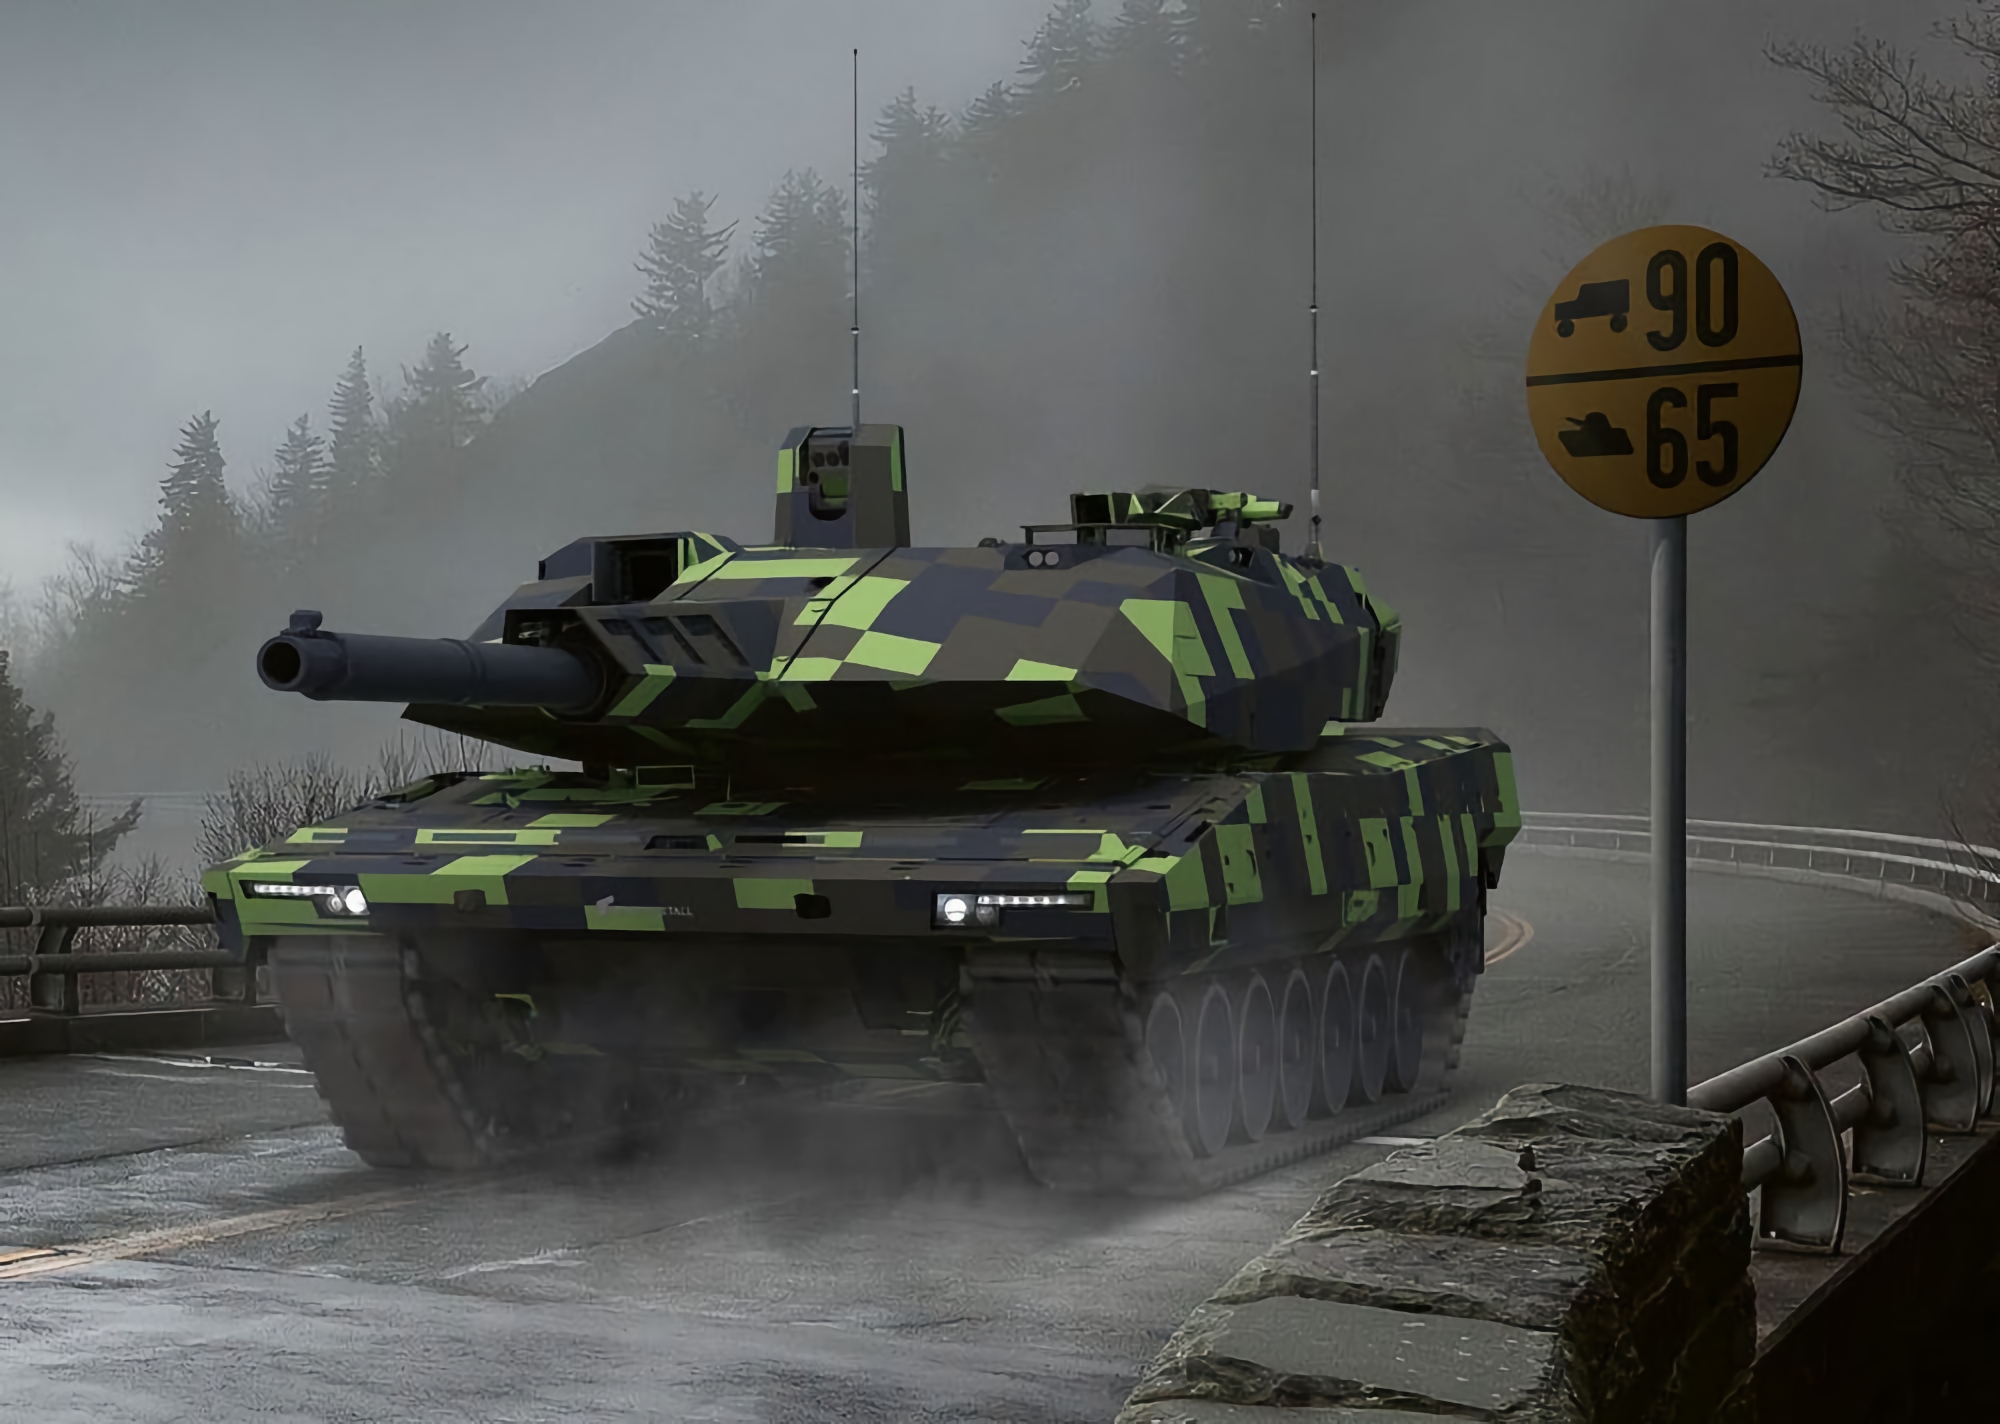 Panther KF51 – Rheinmetall's new main battle tank